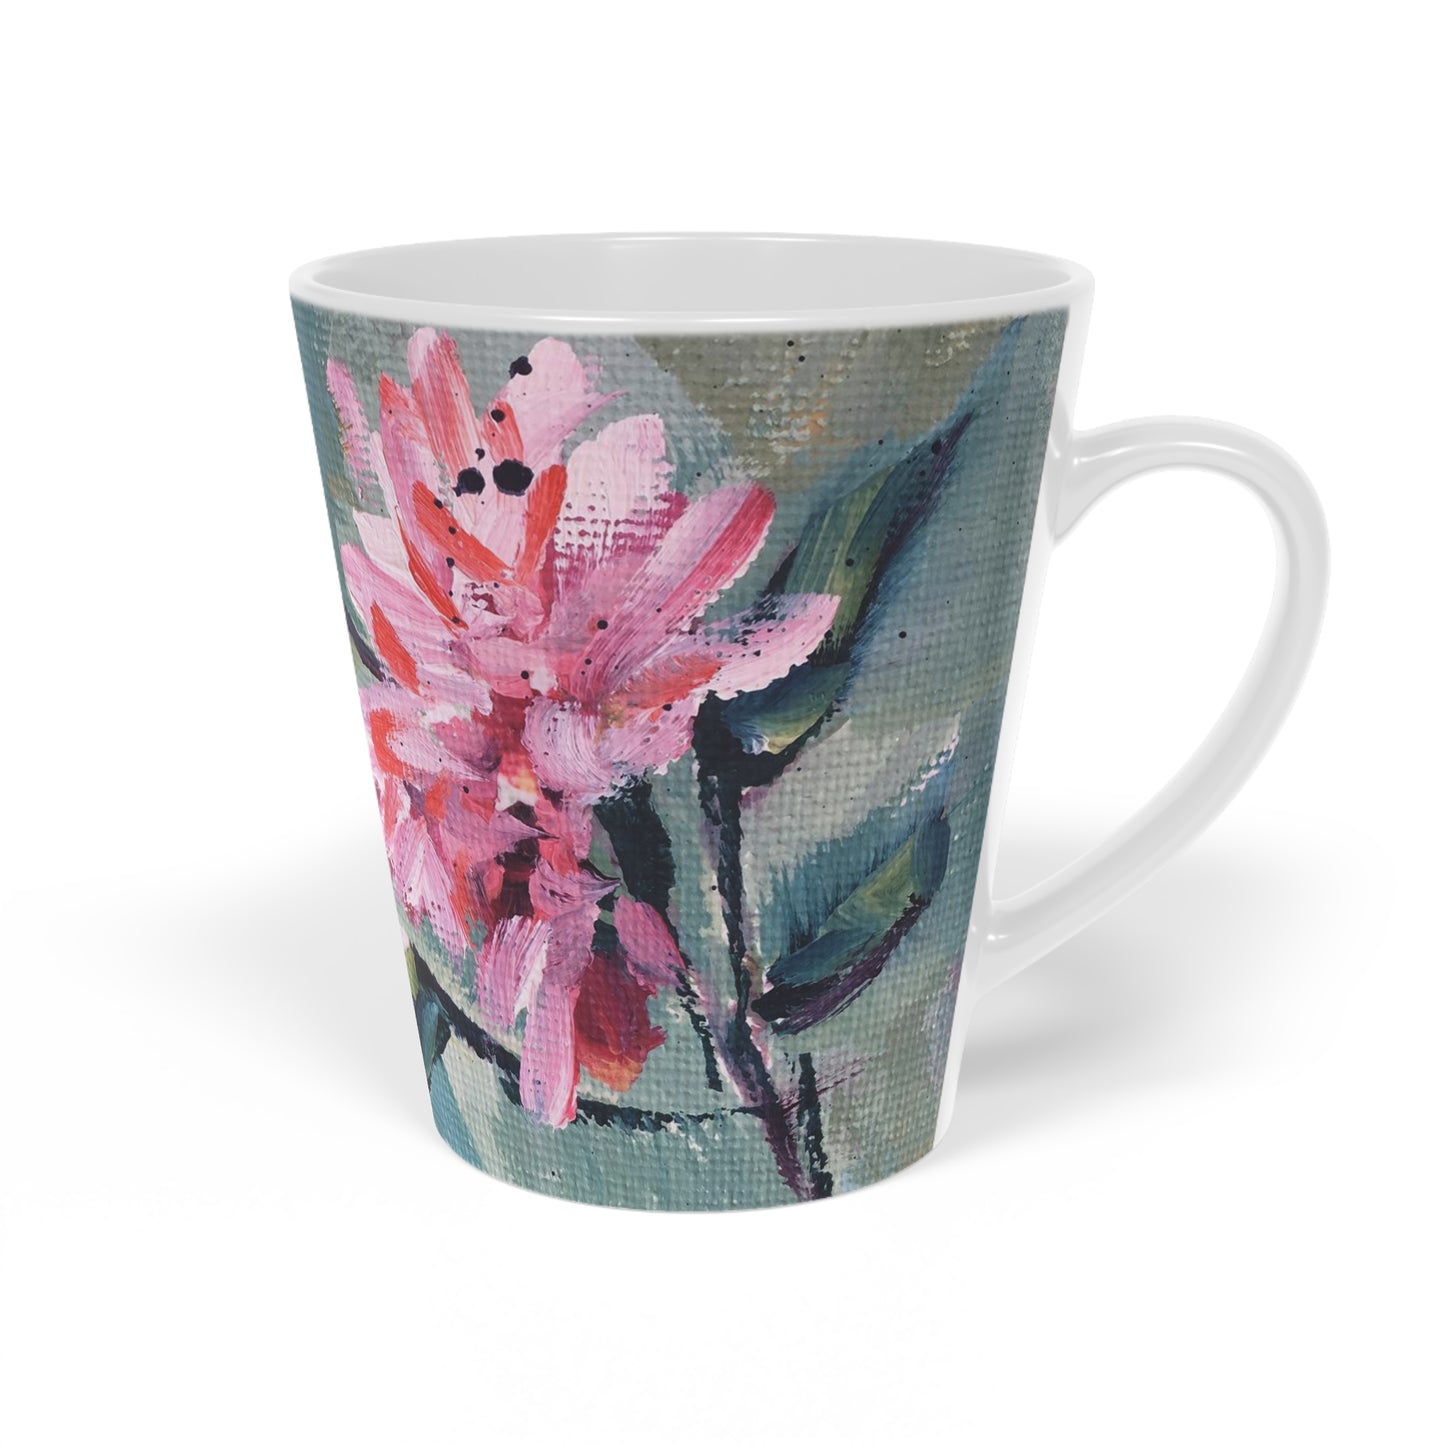 Taza para café con leche con diseño de flor rosa y colibrí rosa, 12 oz